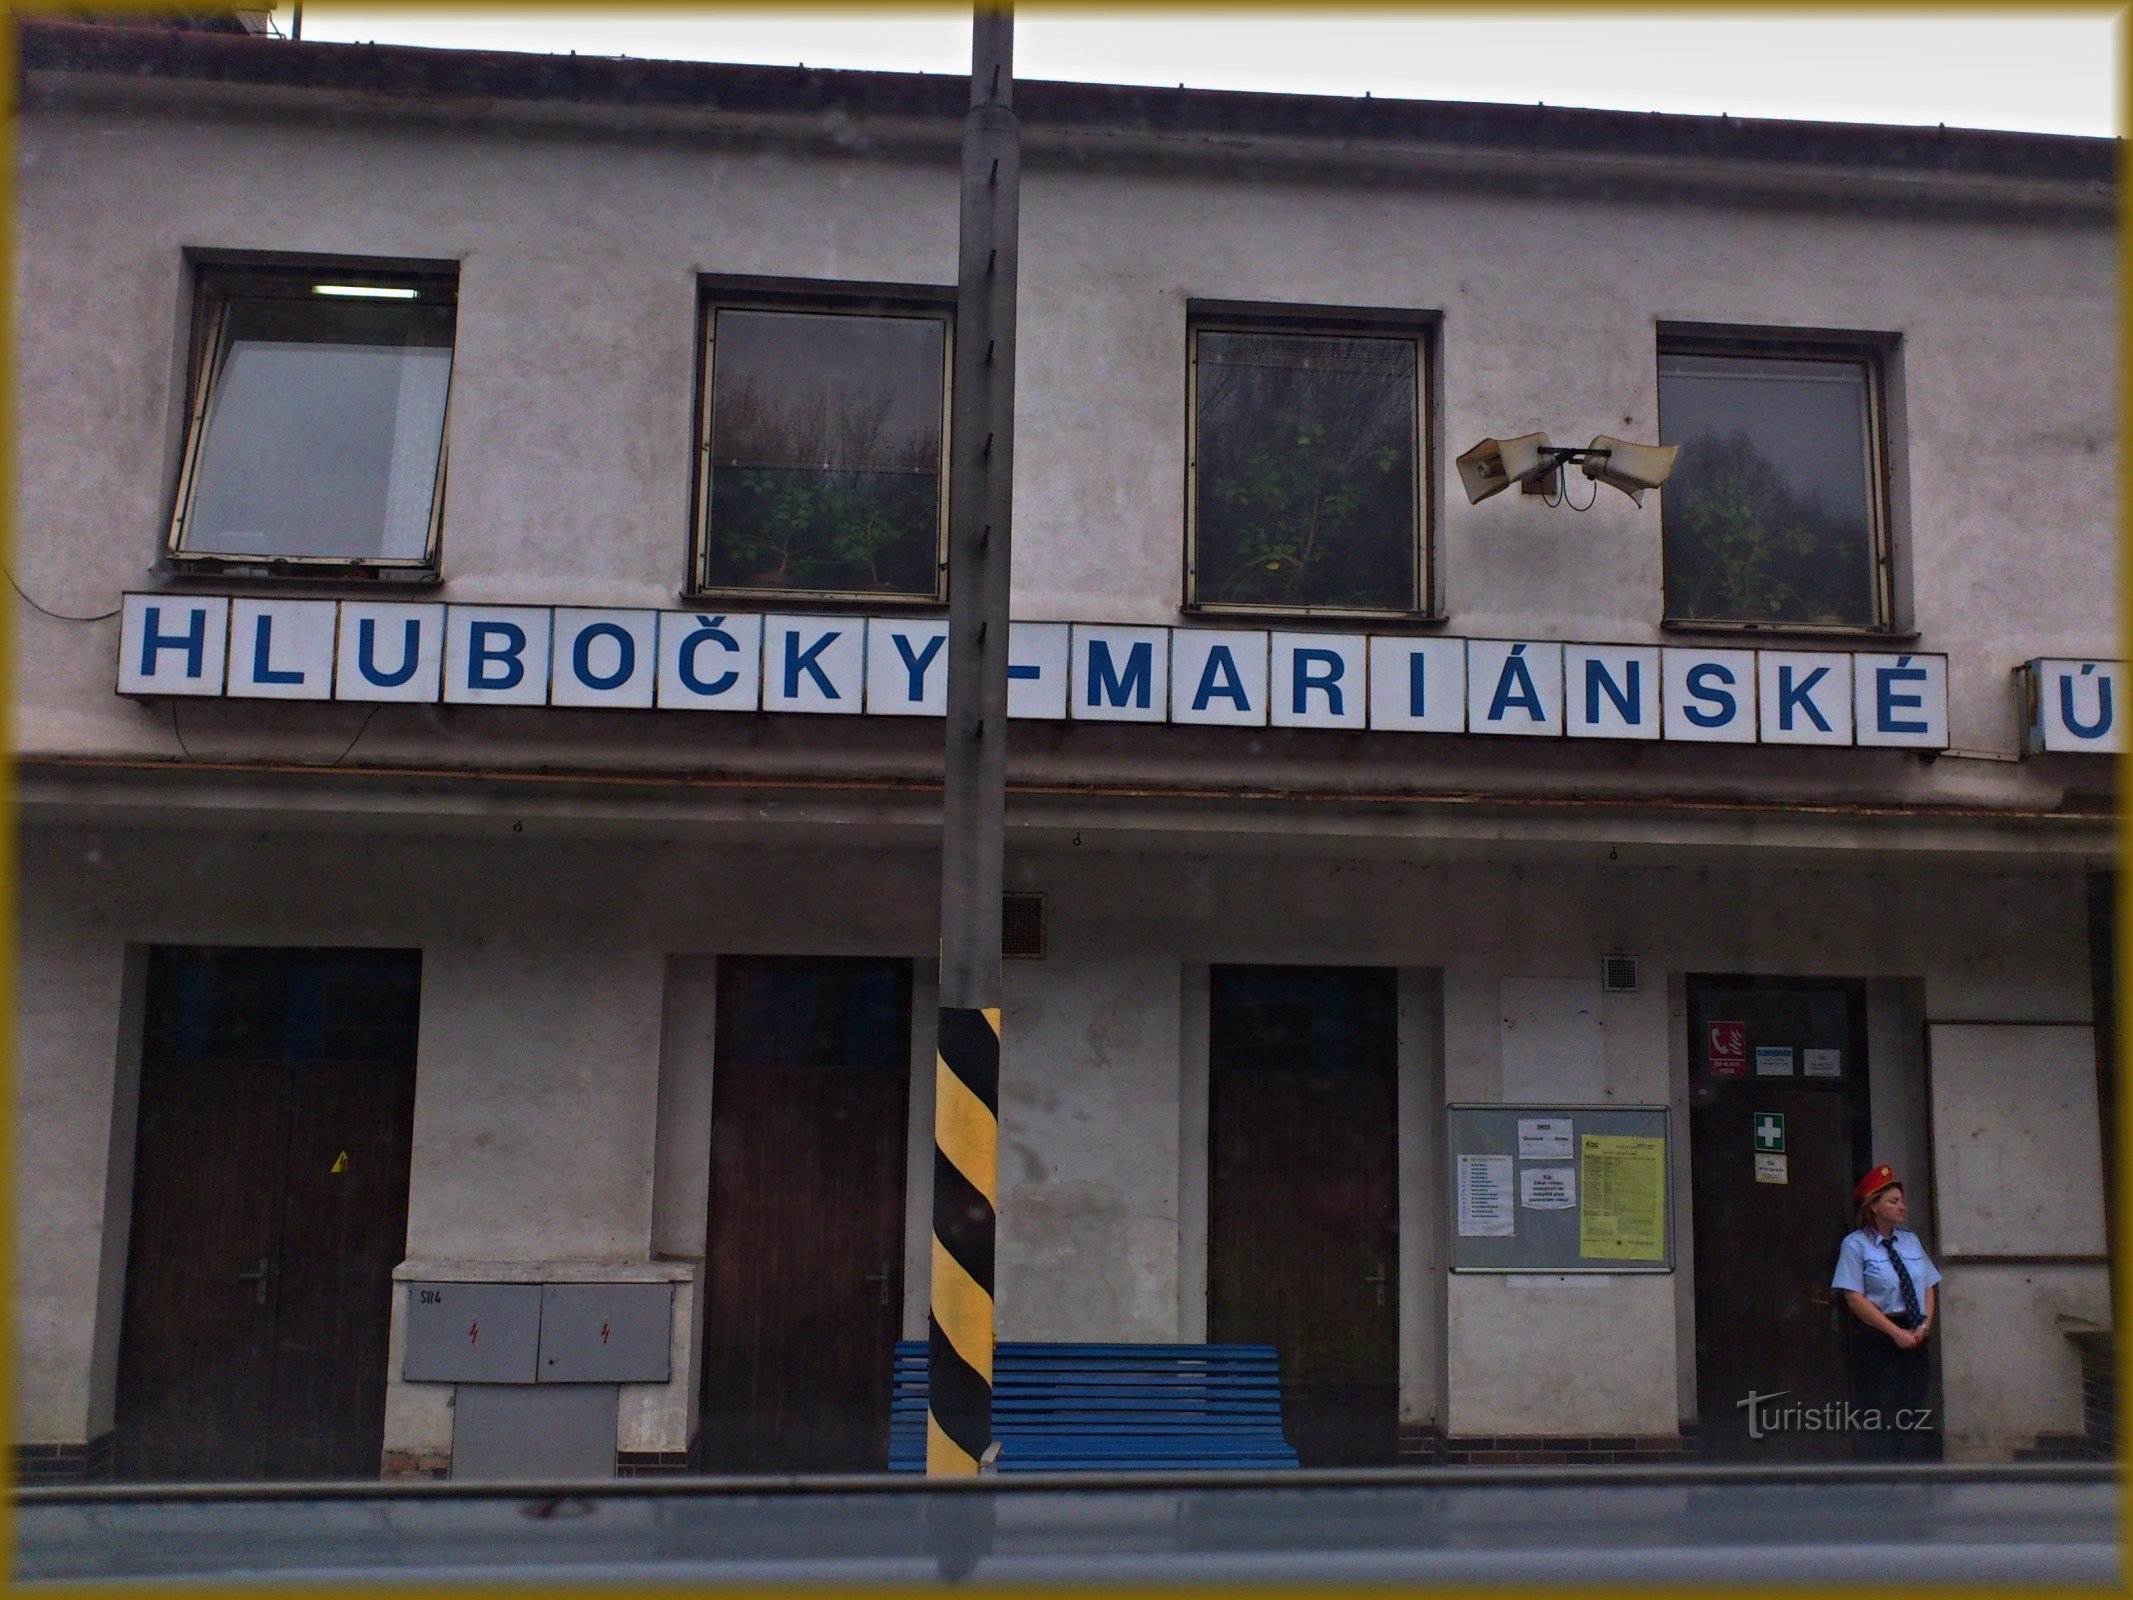 Hlubočky-Marianske Valley - dworzec kolejowy